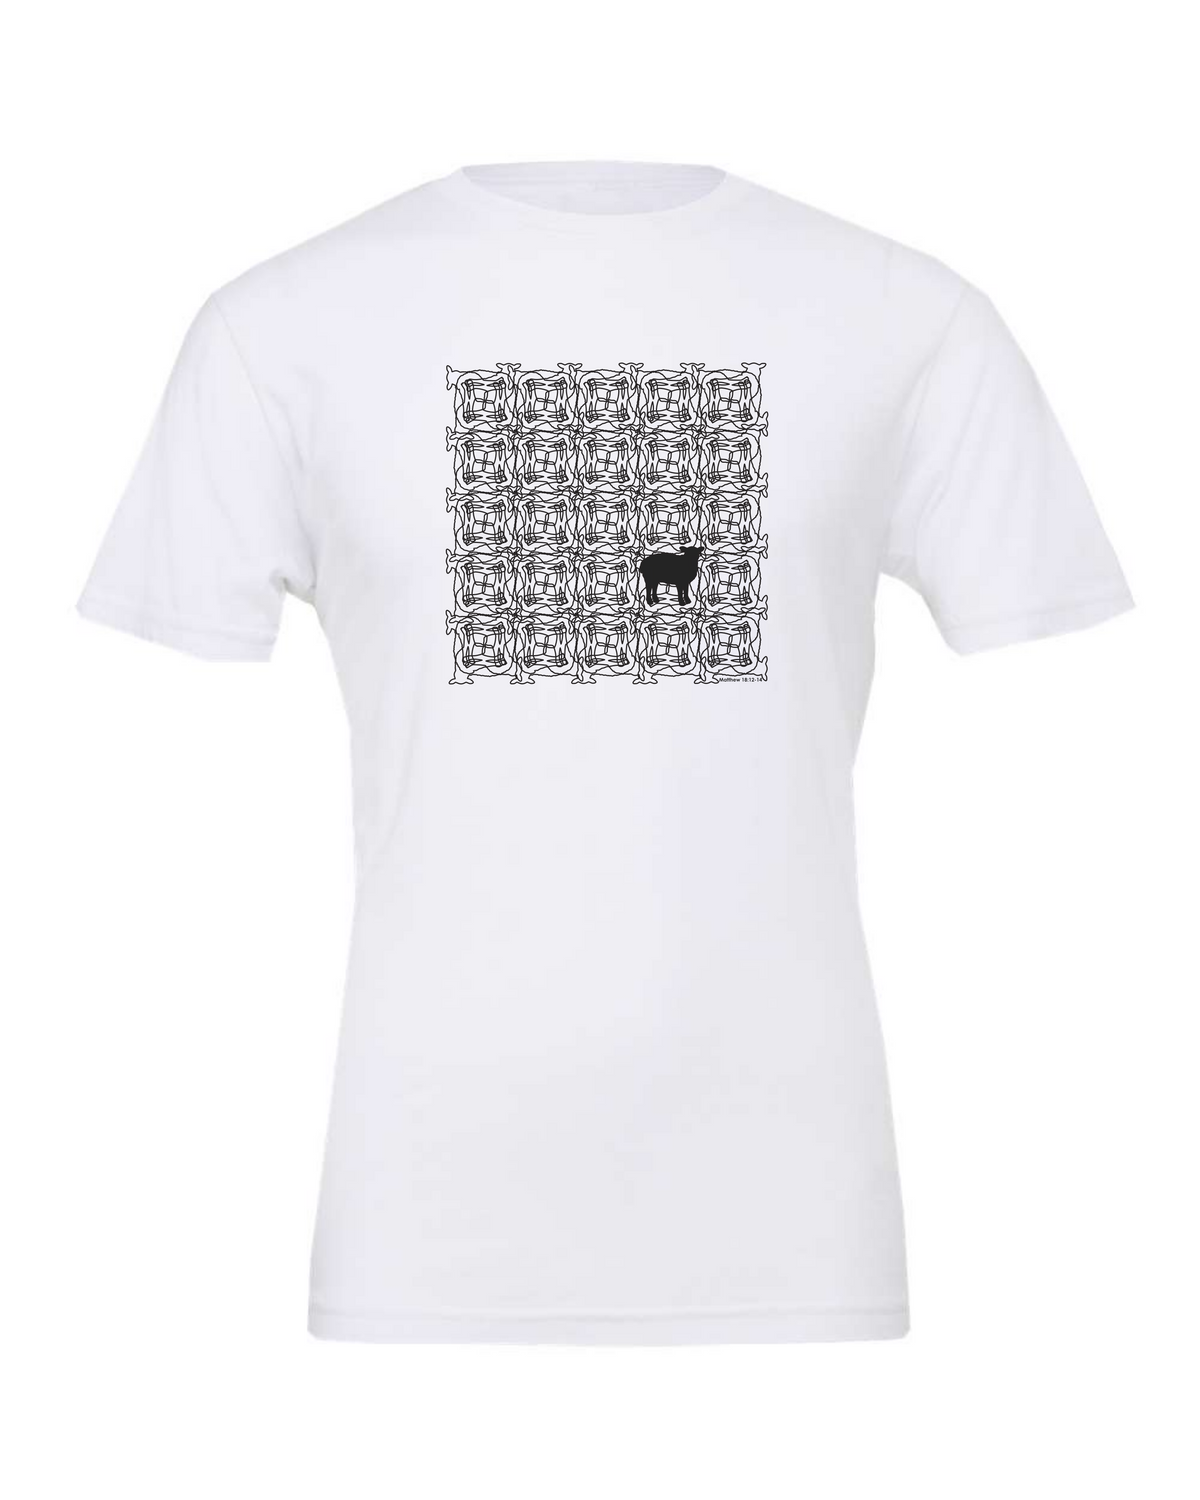 99 Sheep - Adult T-shirt